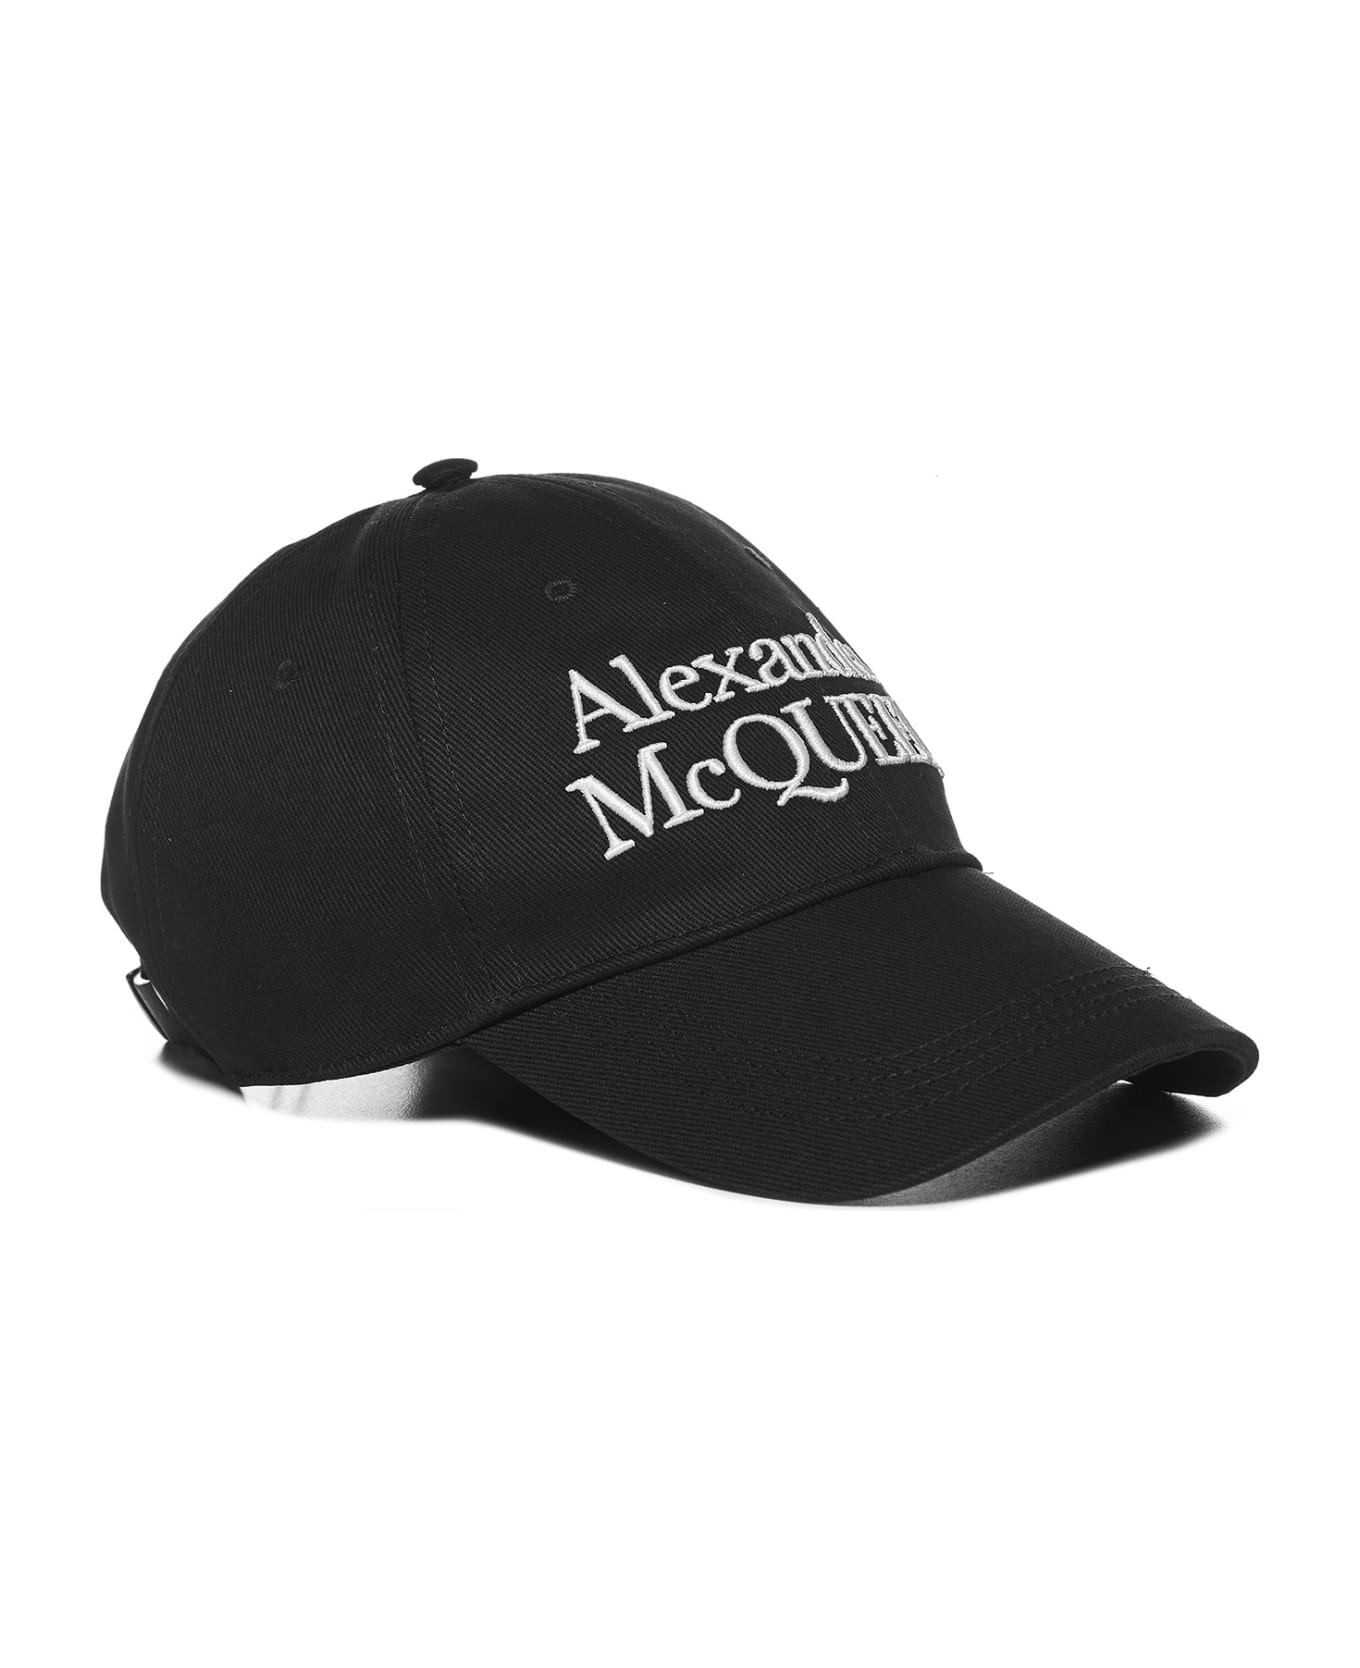 Alexander McQueen Stacked Hat - Black/ivory 帽子